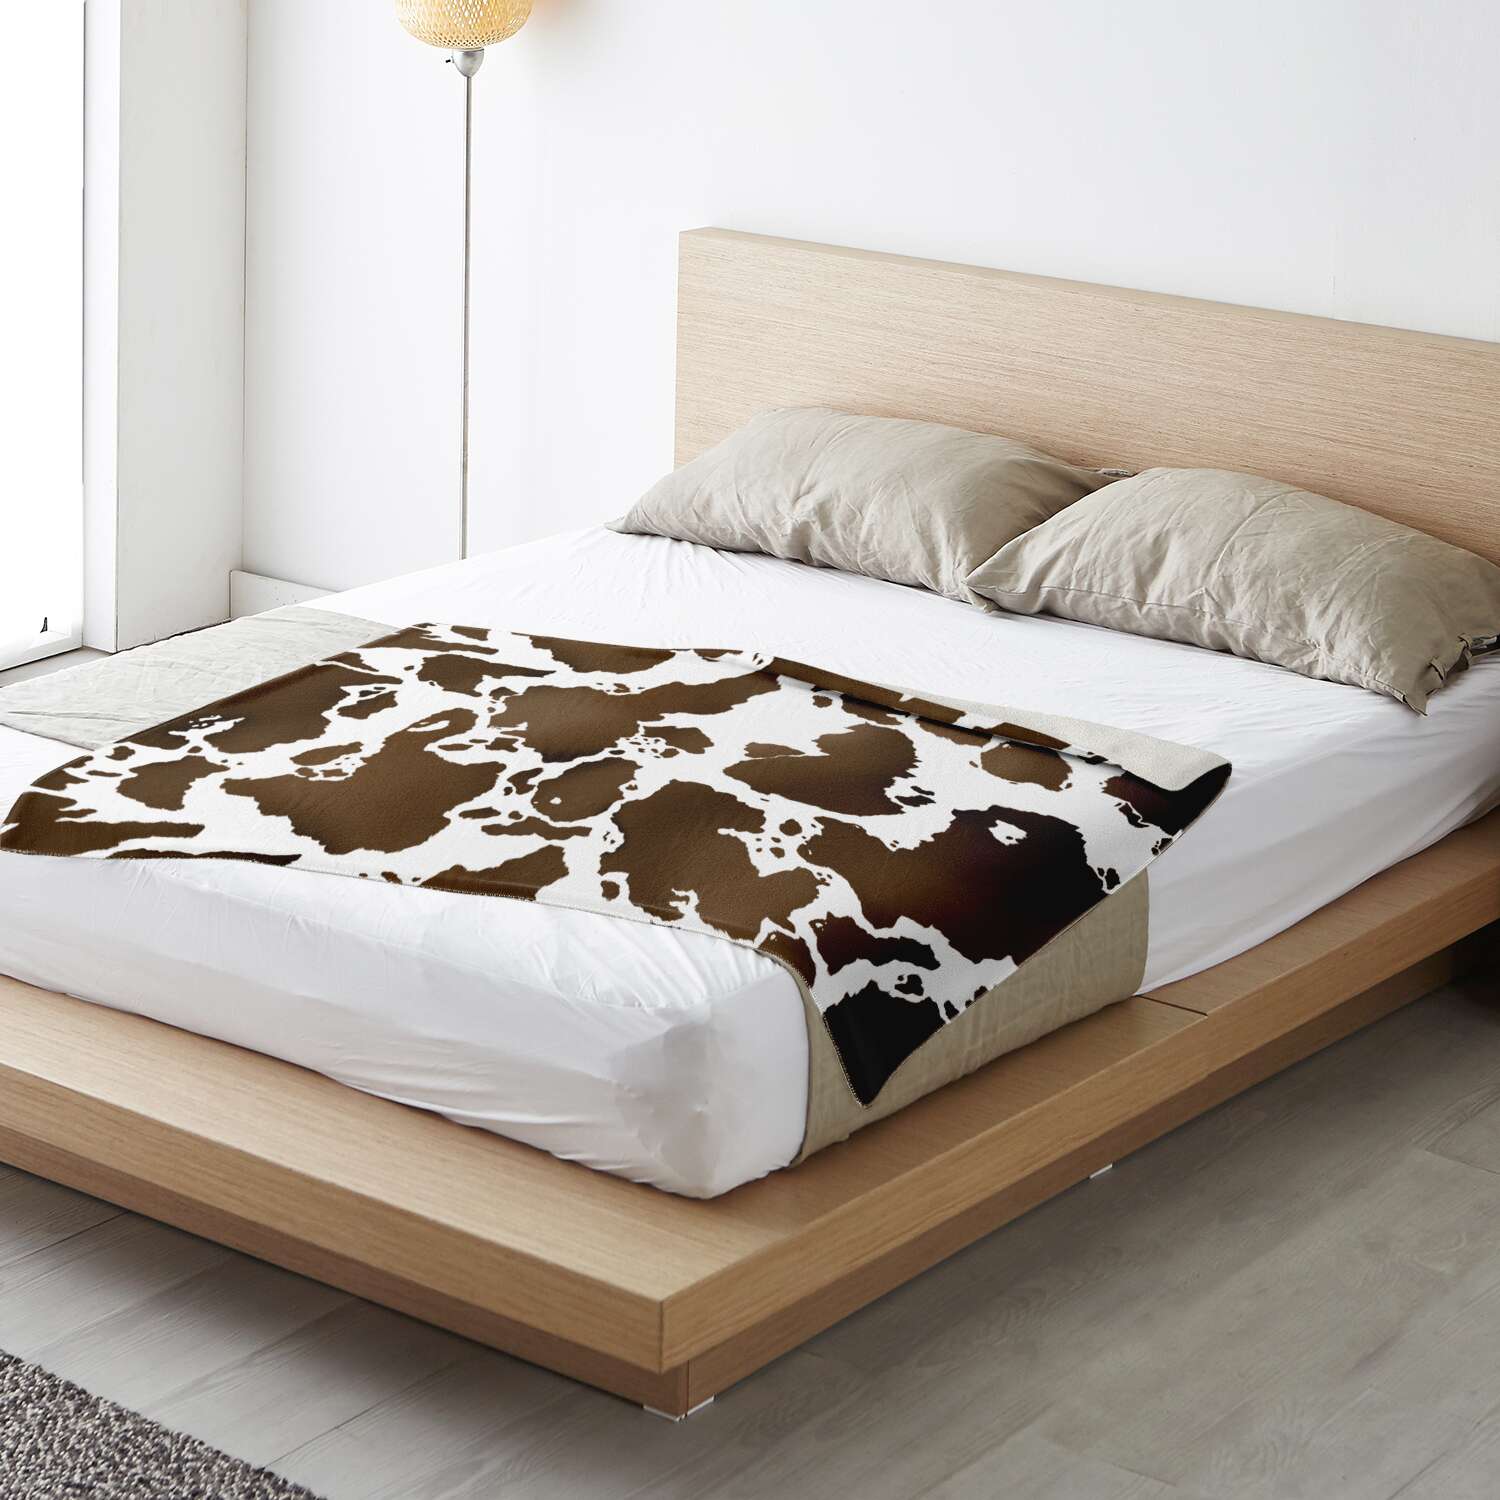 794851d2cea06697124c364124eea405 blanket horizontal lifestyle bedmedium - The Cow Print